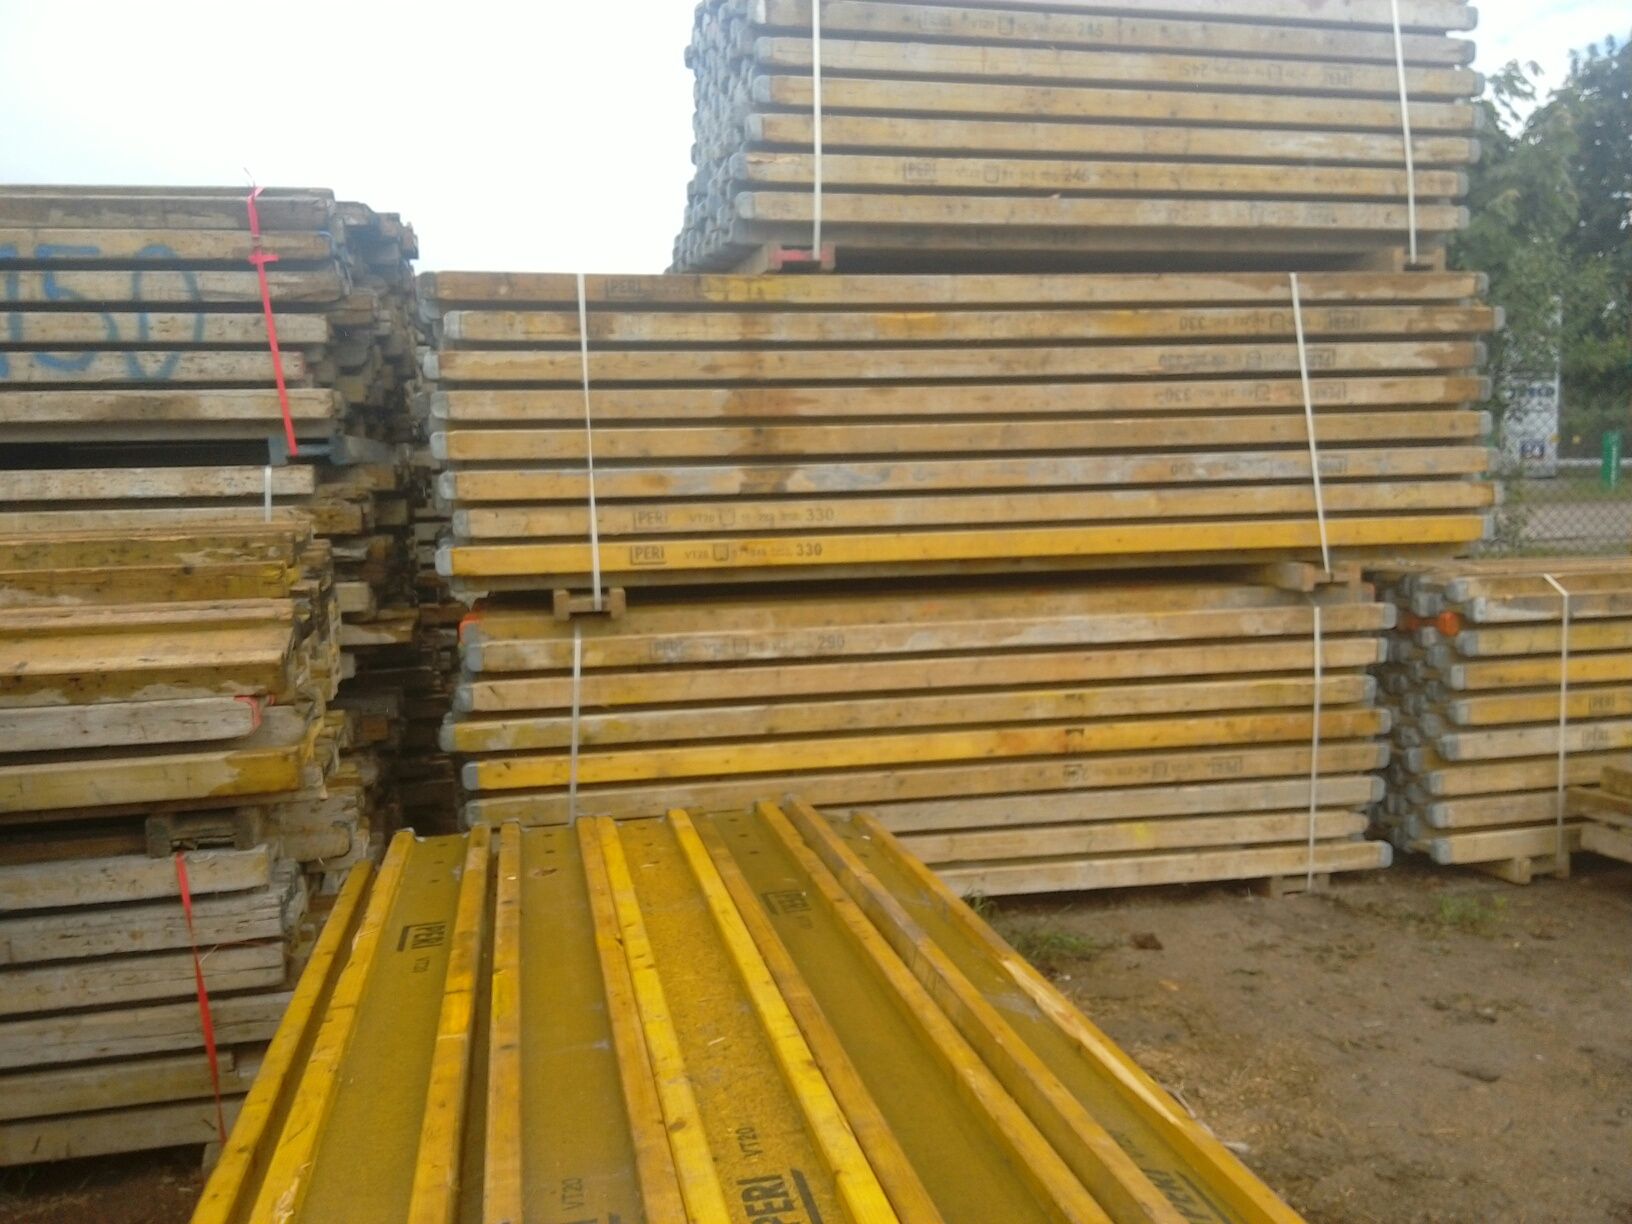 Podpory budowlane stemple metalowe budowlane reglowane 4m 20kn. Mocne.